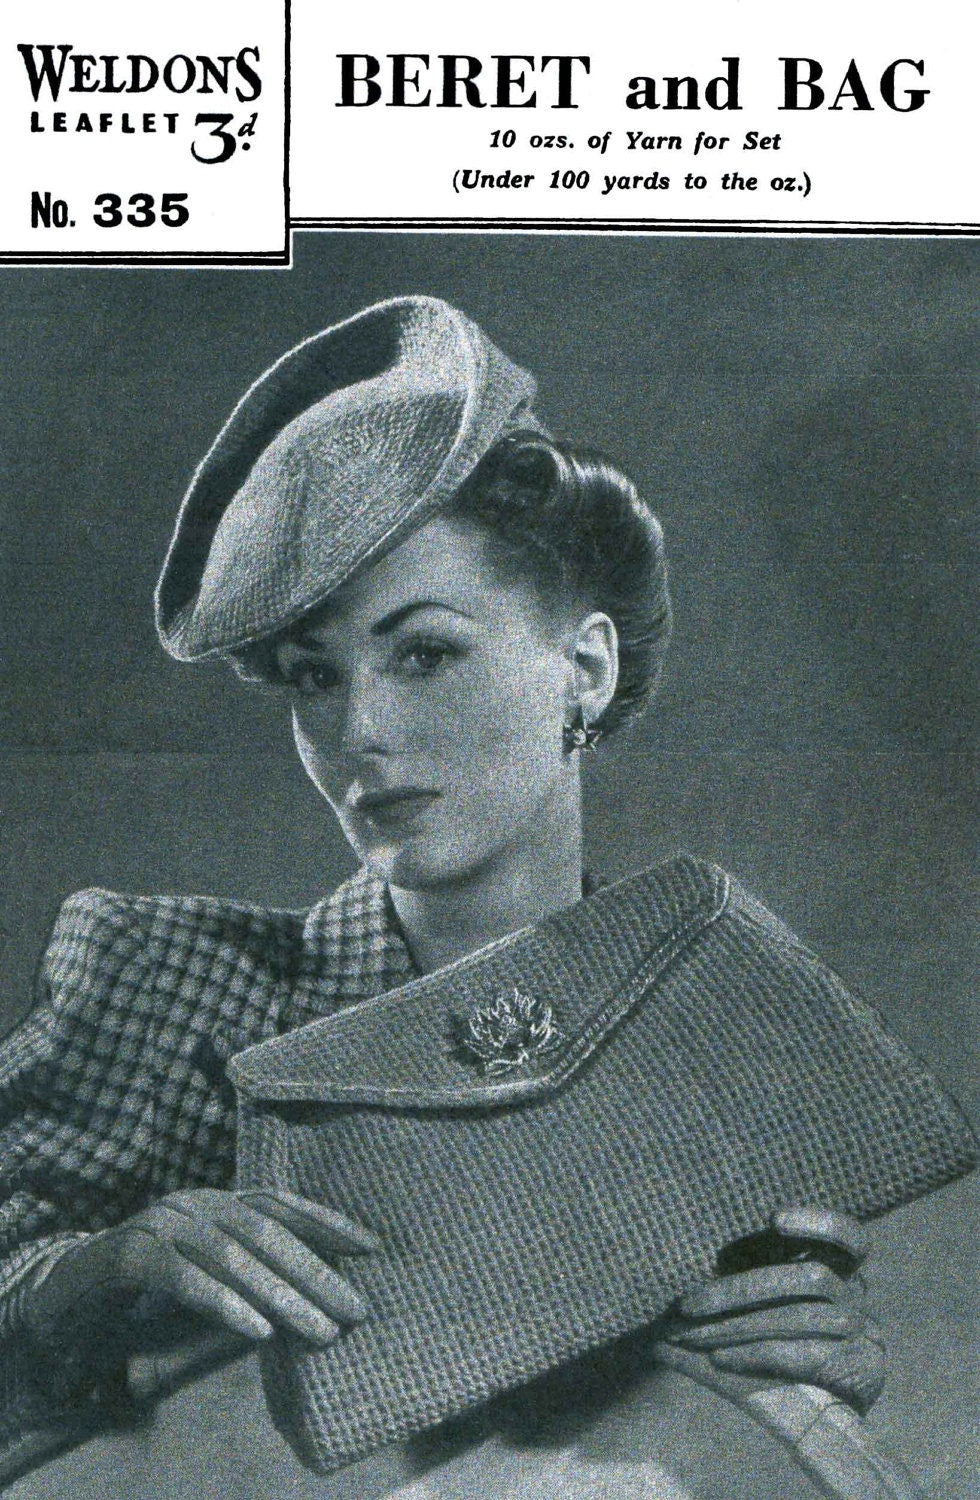 Ladies Bag and Beret Hat, 40s Knitting Pattern, Weldons 335